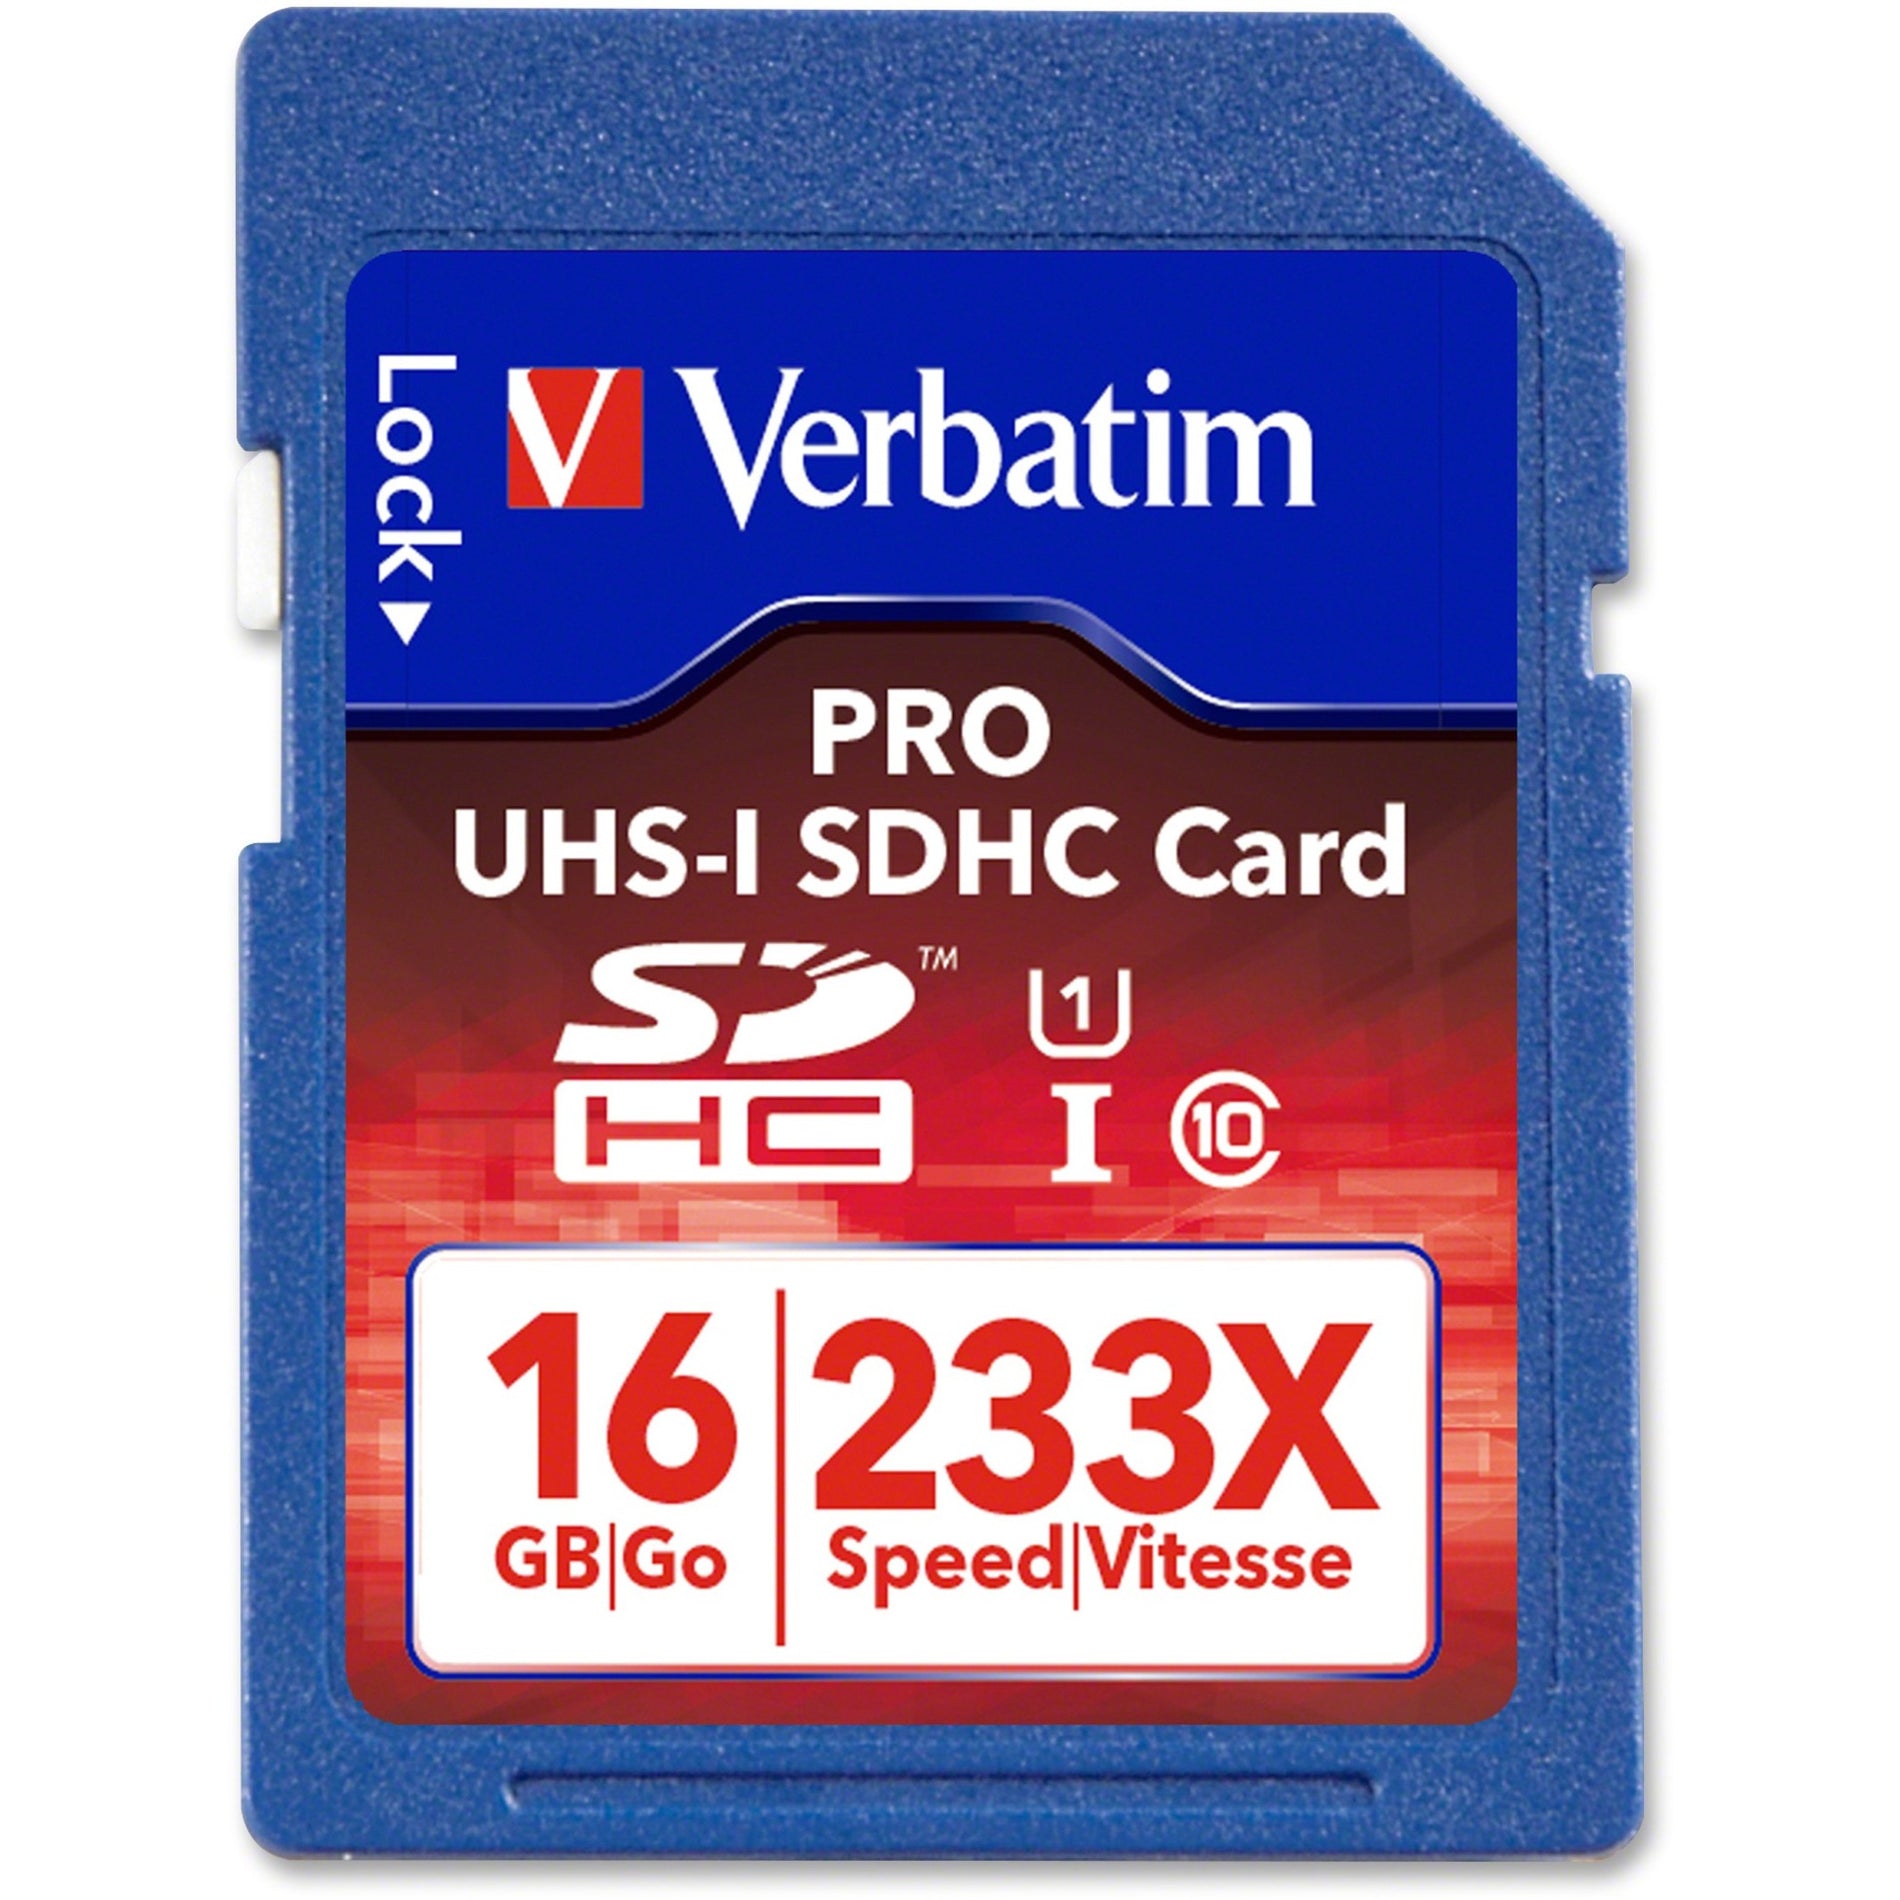 Verbatim 44031 16GB PRO 233X SDHC UHS-1 Memory Card, Class 10, Write Protection Switch